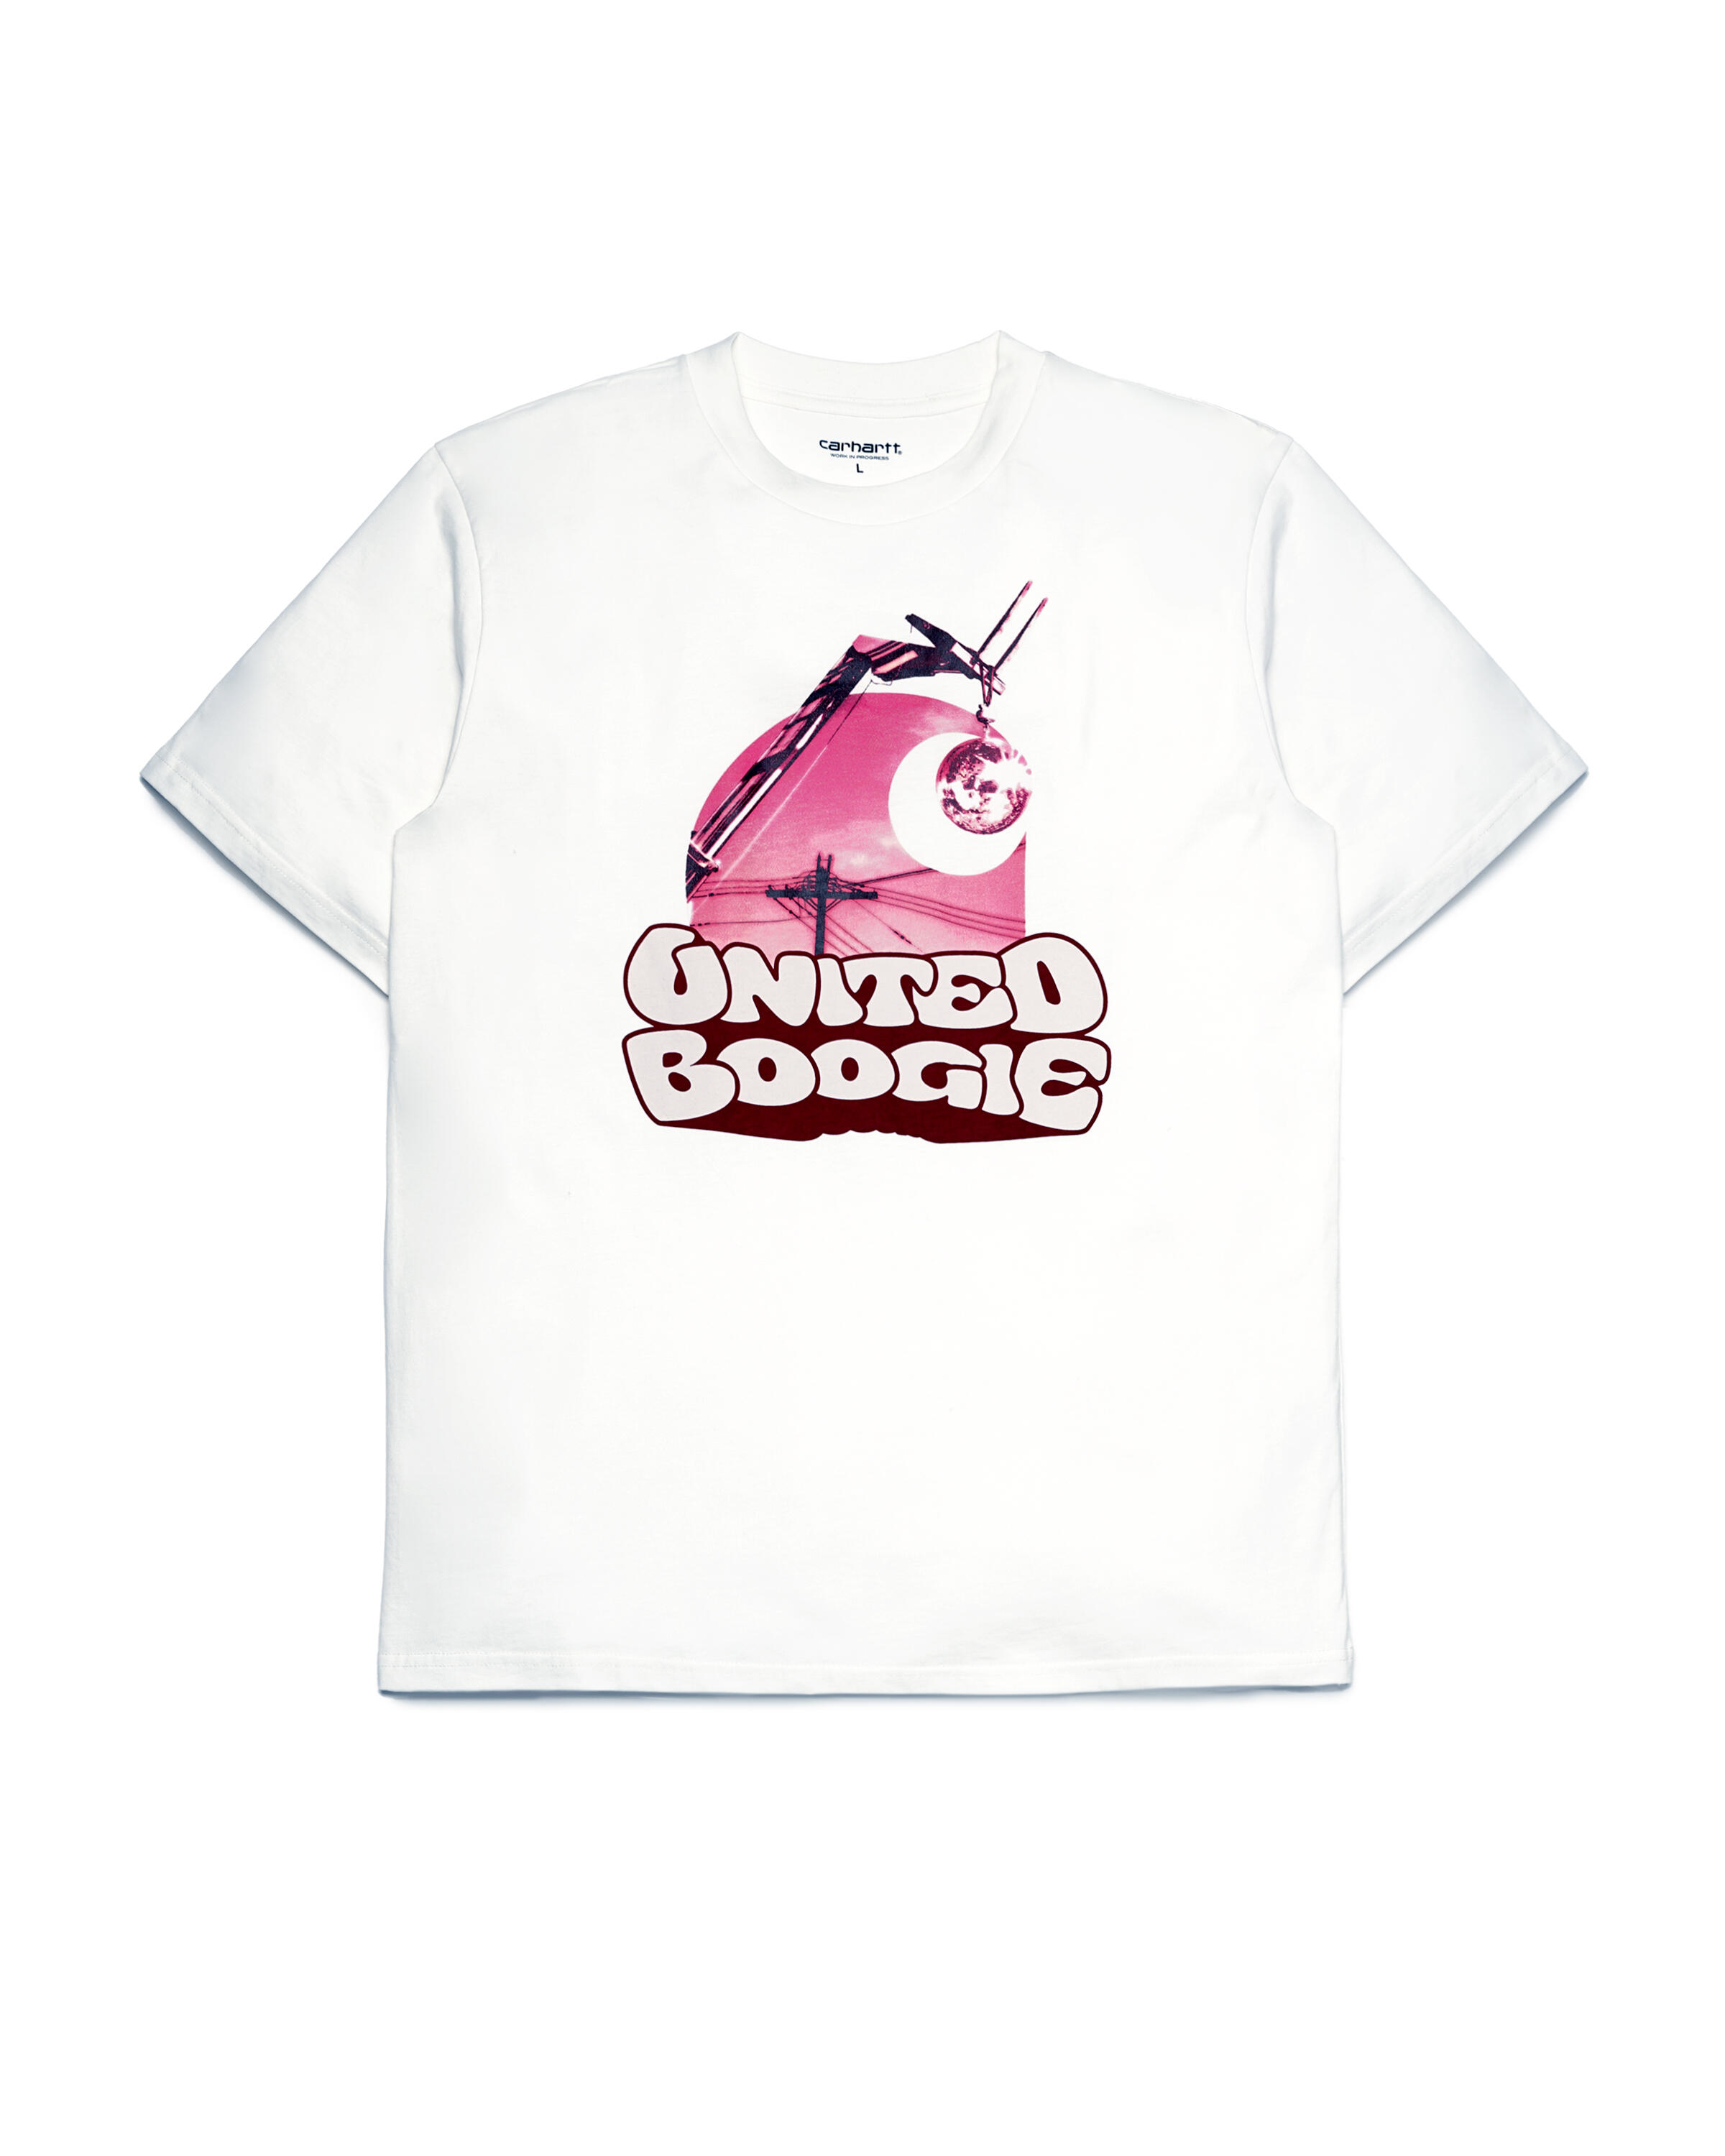 carhartt wip s/s united t-shirt